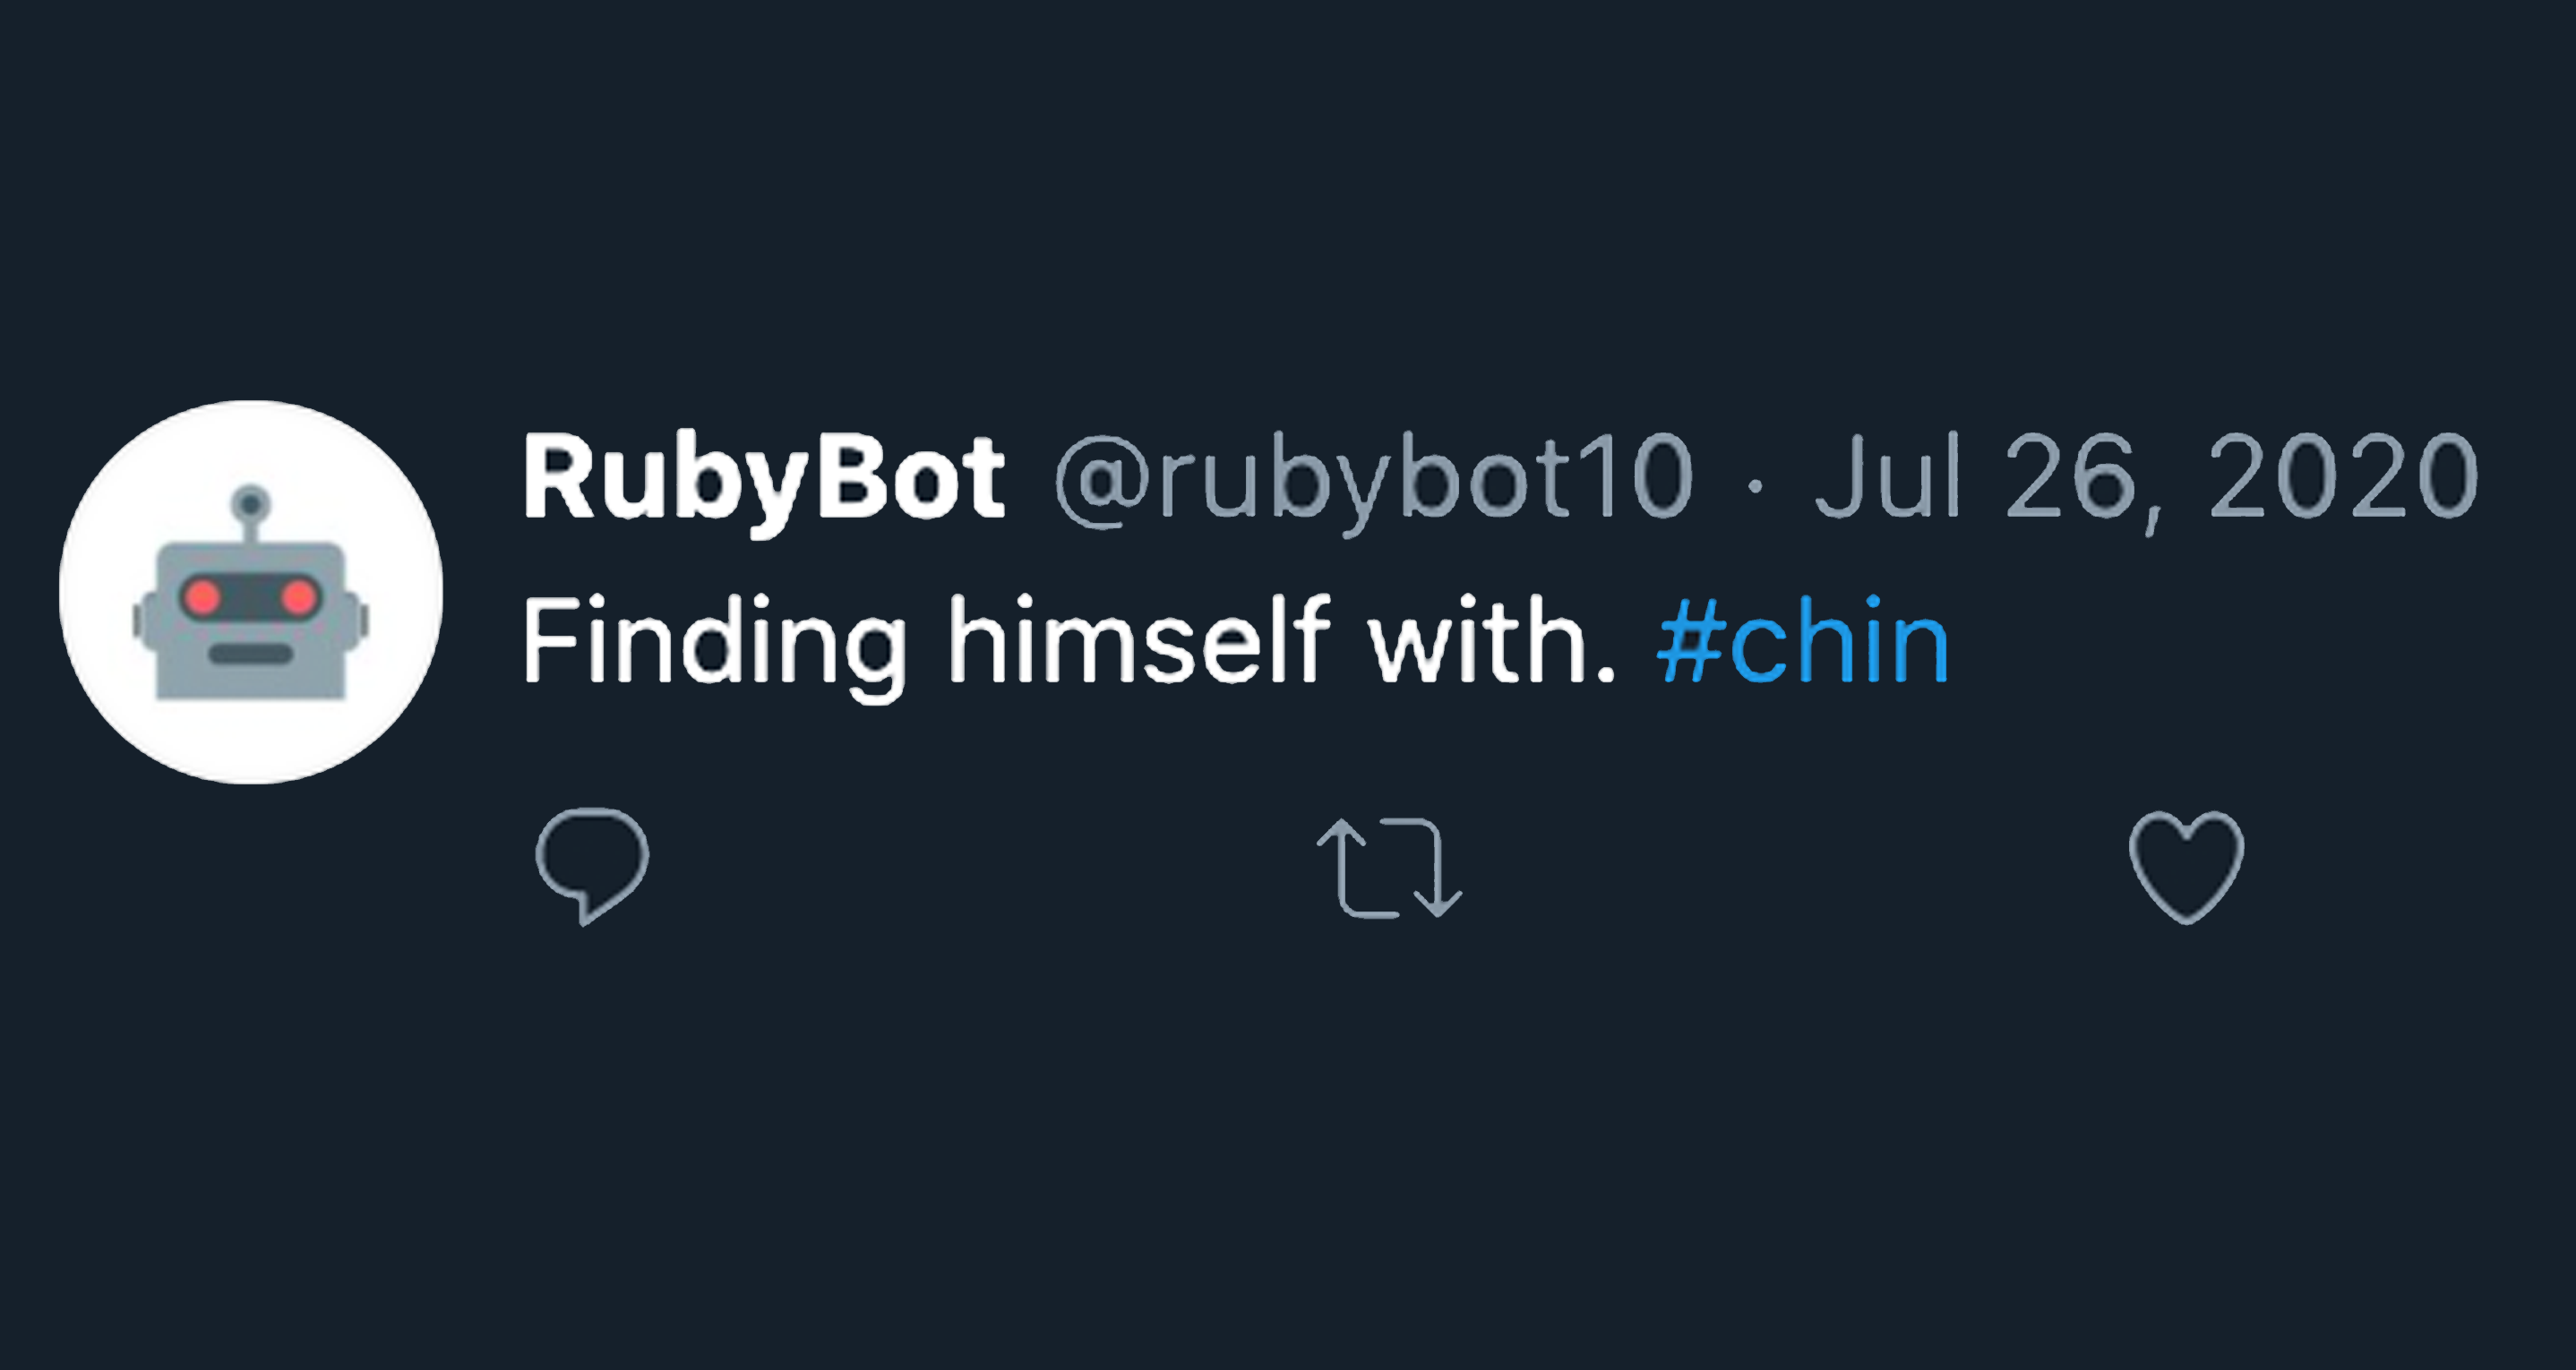 Screenshot of RubyBot tweet saying 'Finding himself with. #chin'